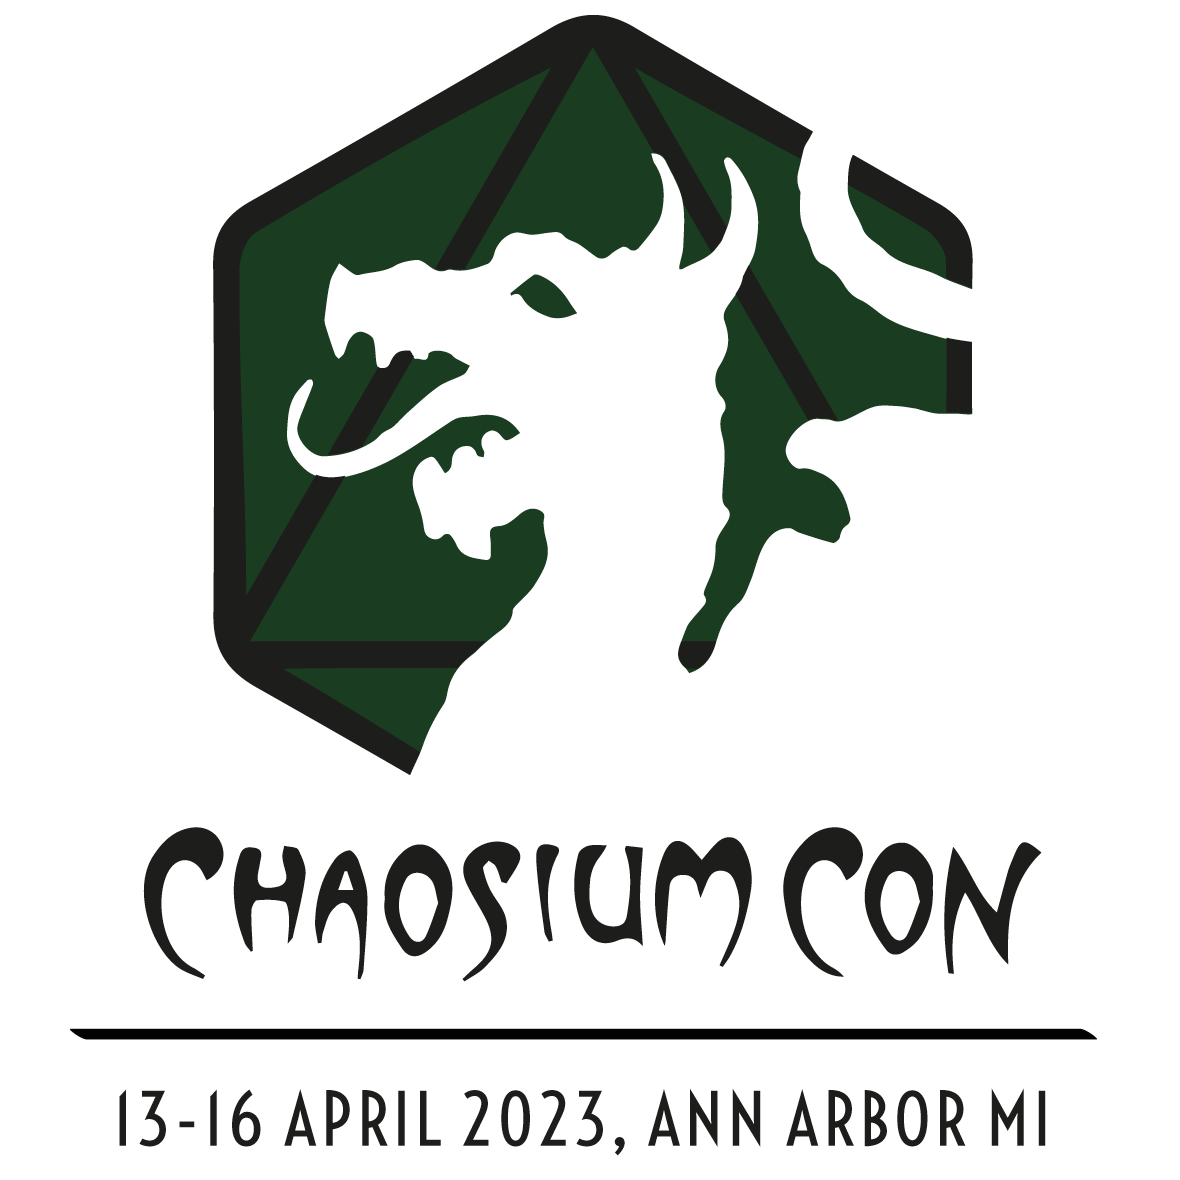 chaosium-con-logo-white-bkgd-square.png